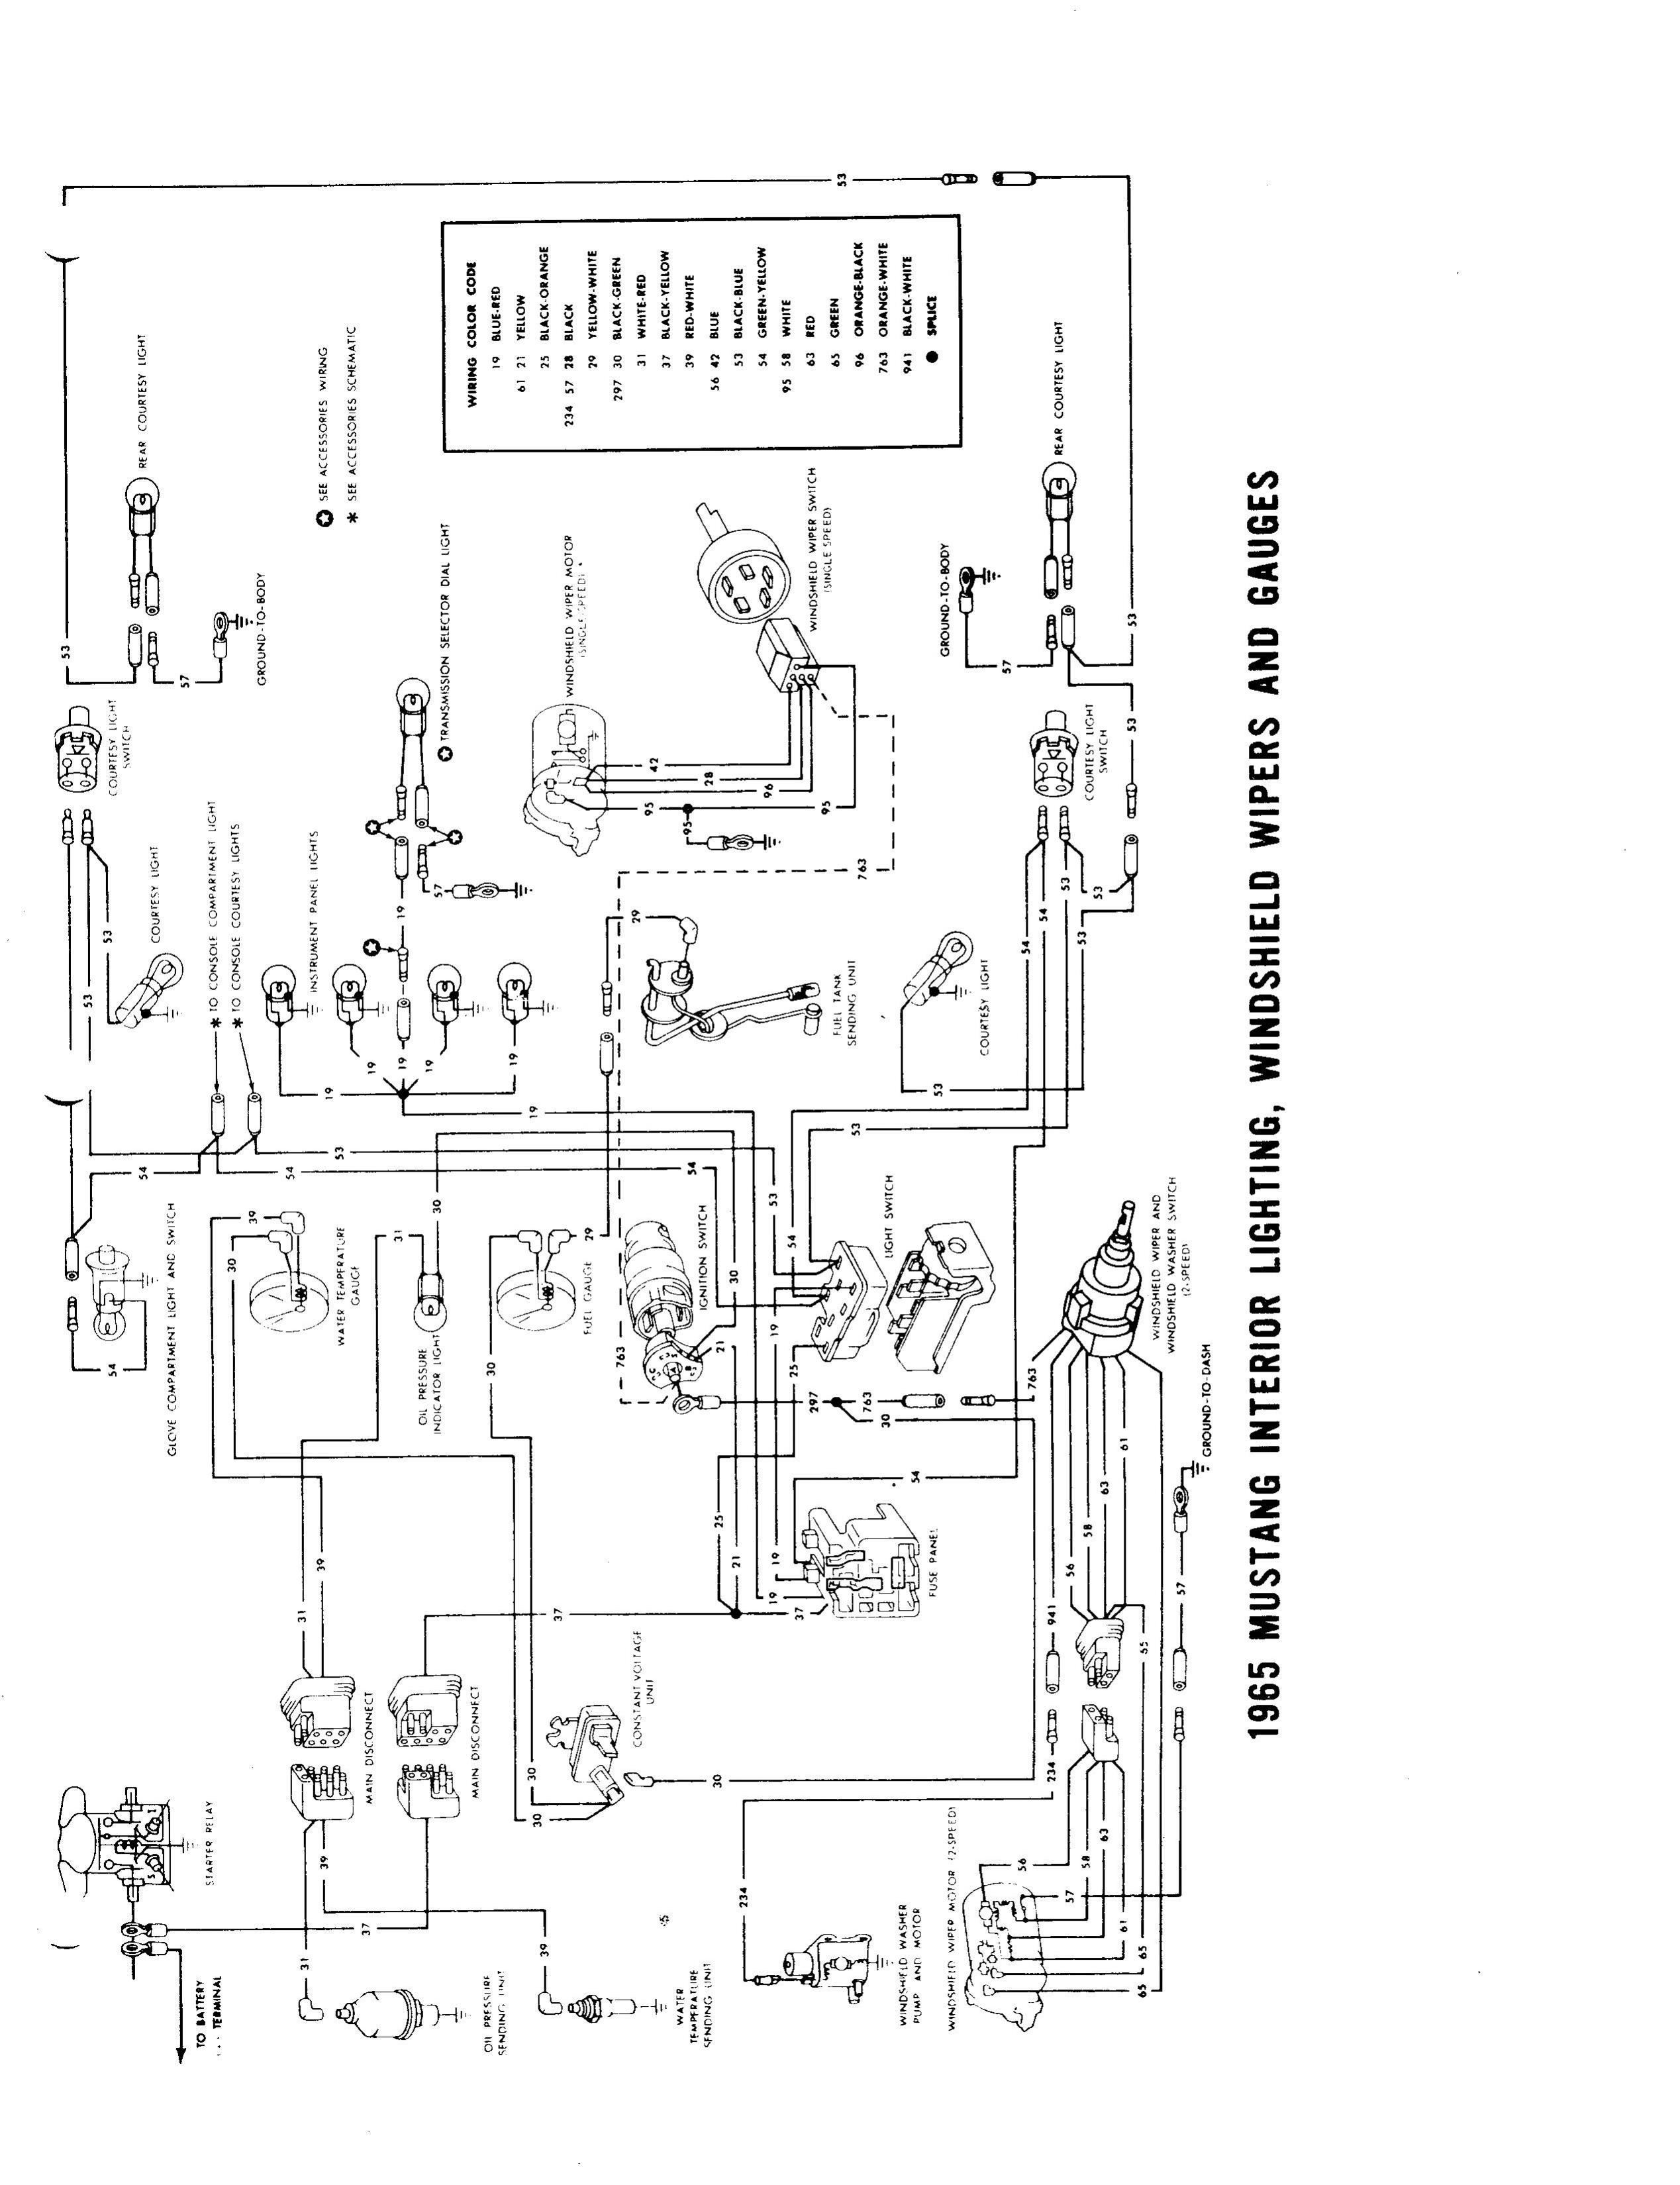 Spitronic Wiring Diagram 1uzfe Wiring Diagram Full Hd Version Wiring Diagram